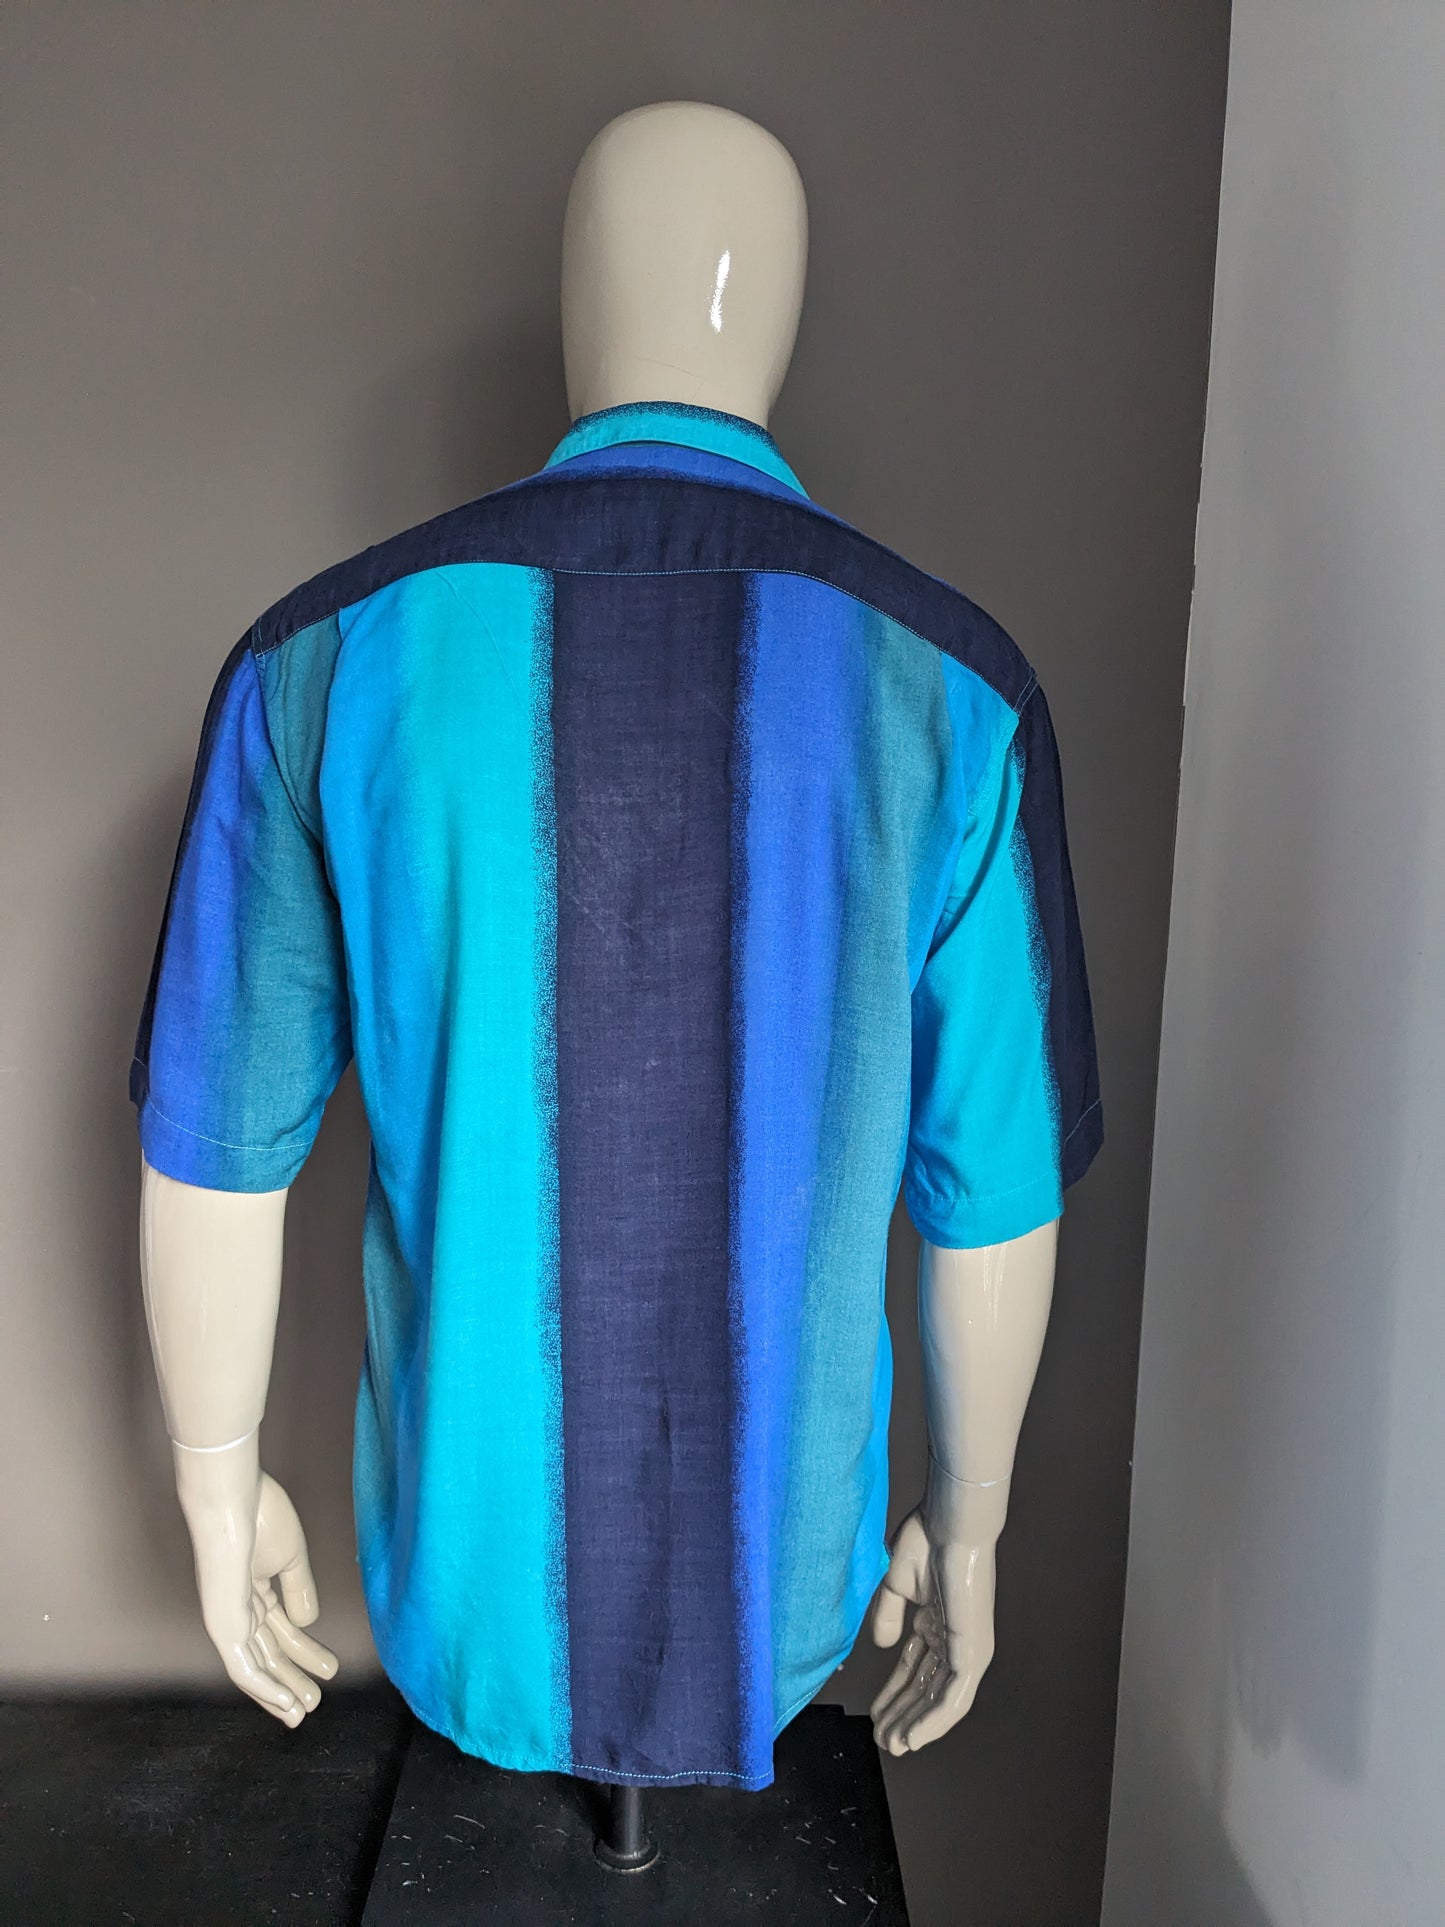 Shirt corto in stile business 80S-90 vintage. Planimetria. Taglia L.